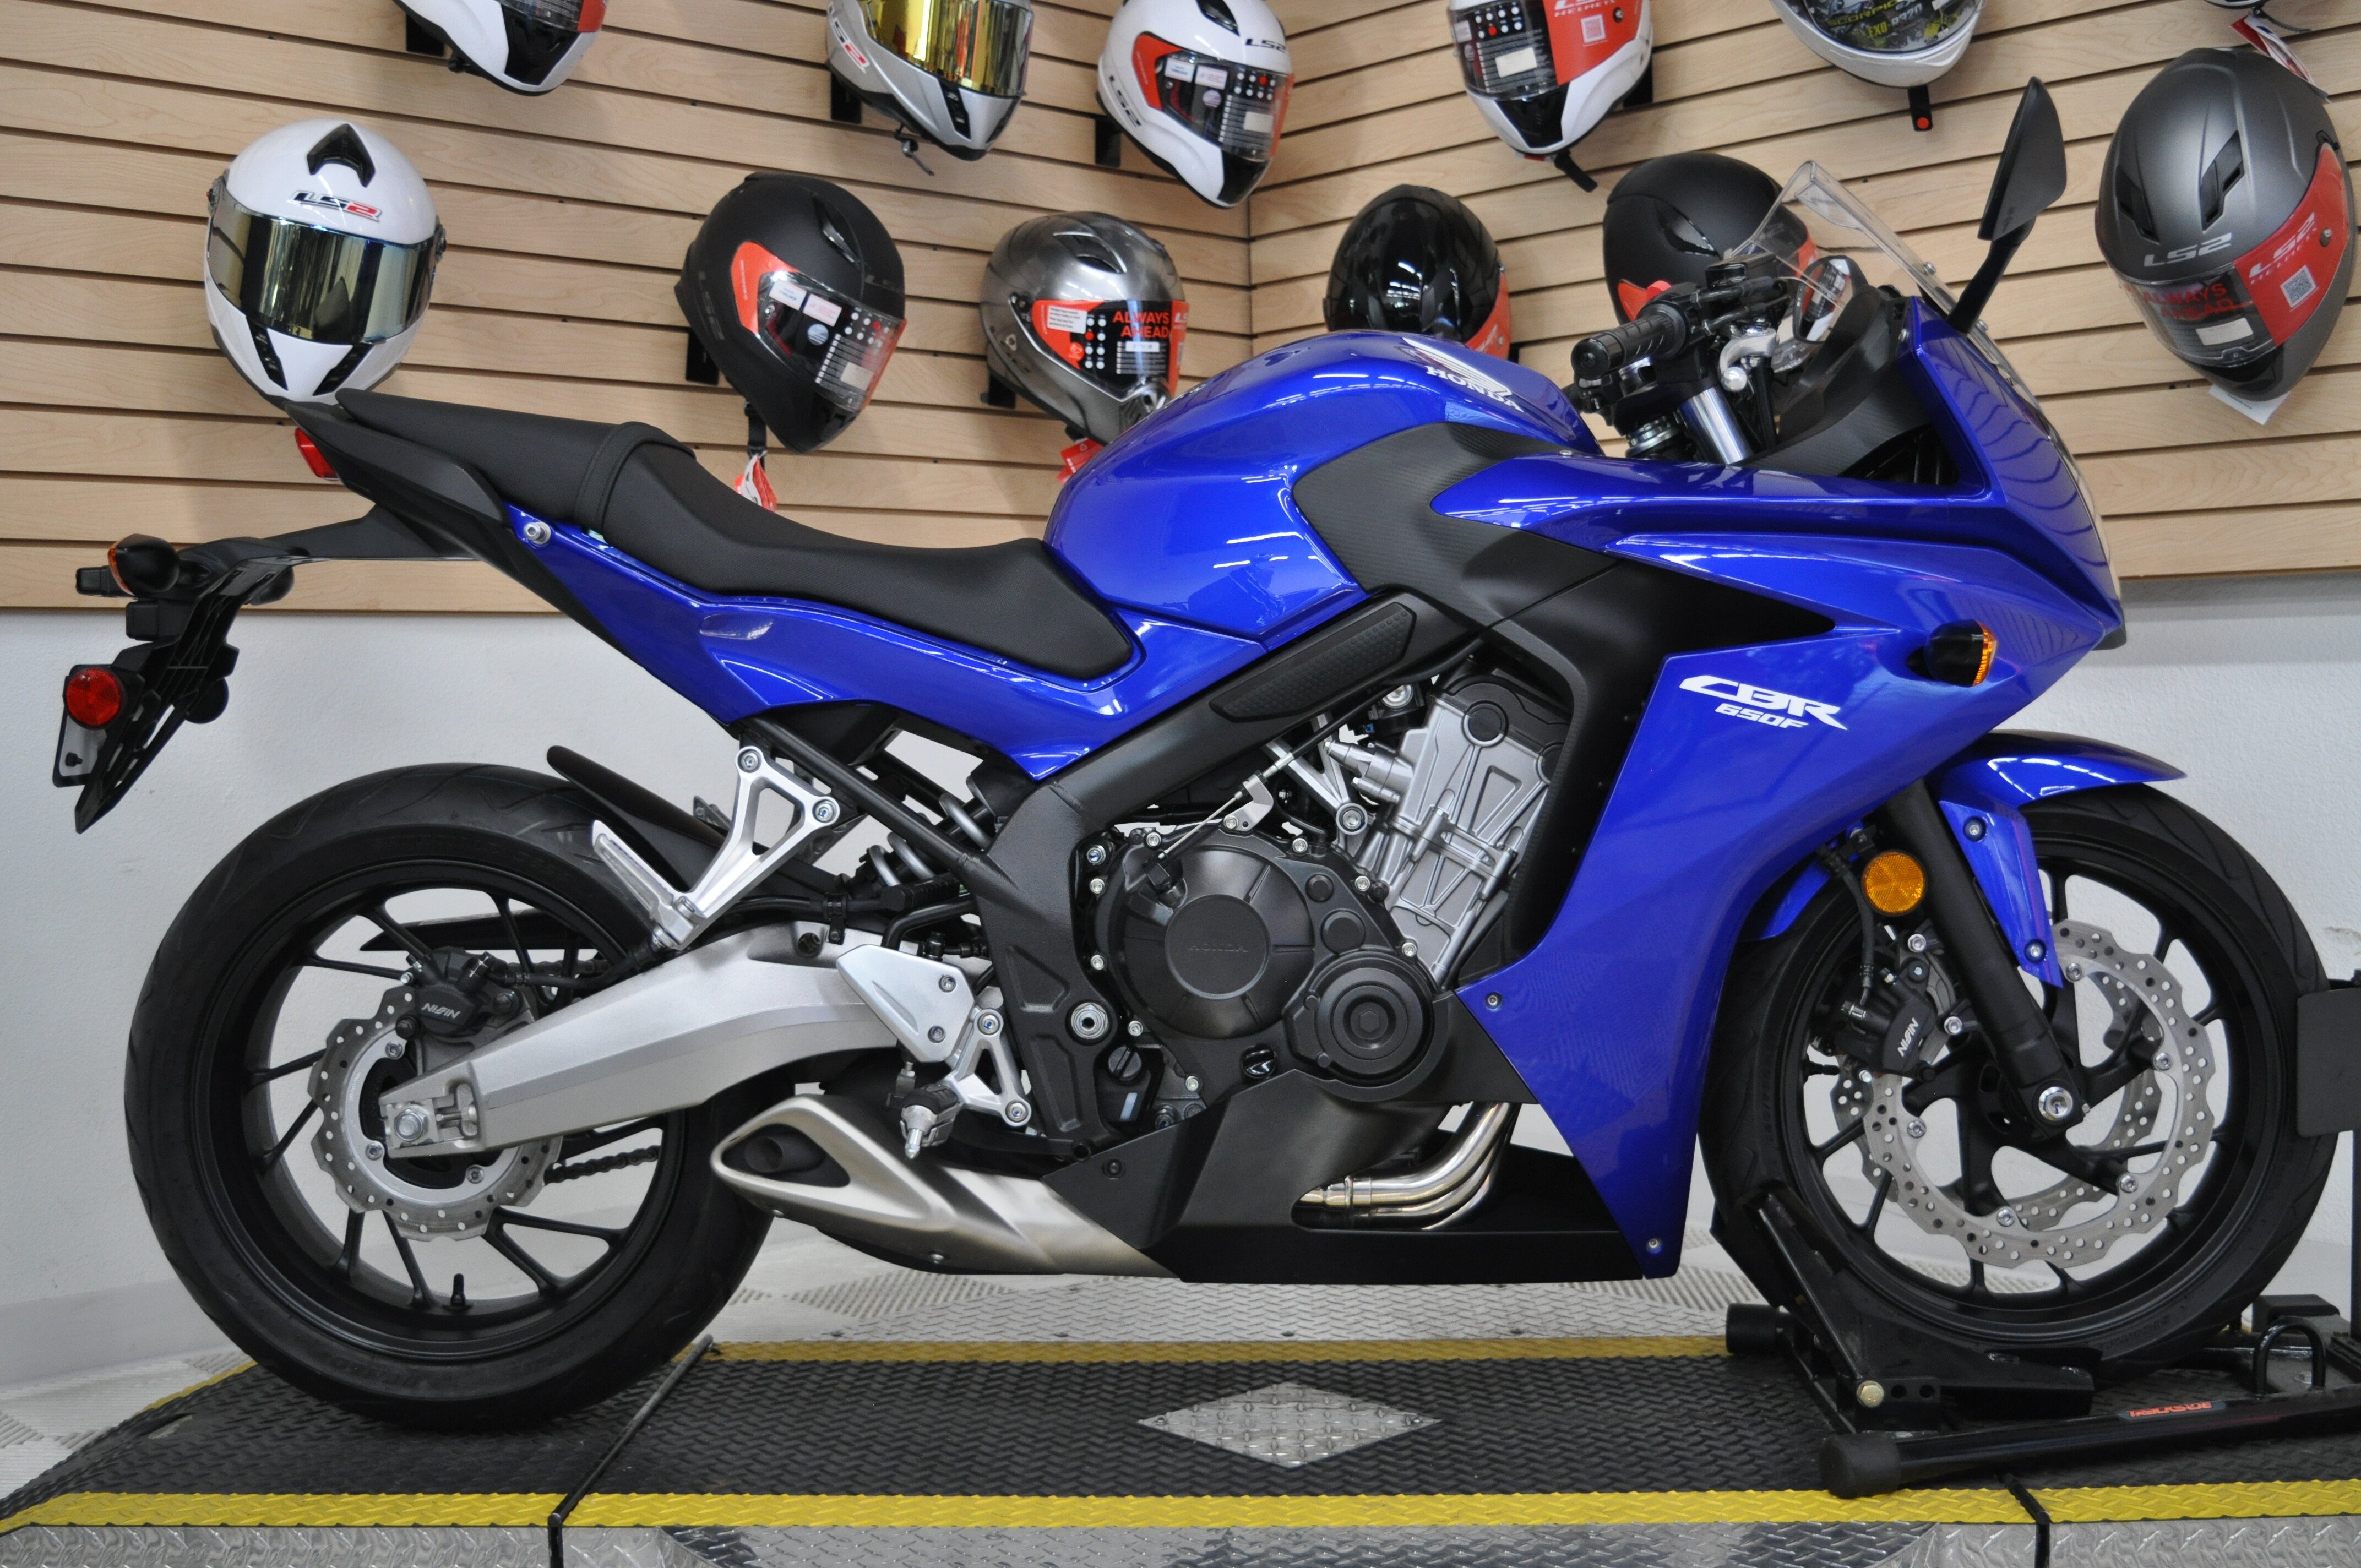 2014 Honda Cbr650f For Sale Near San Diego California 92111 Motorcycles On Autotrader